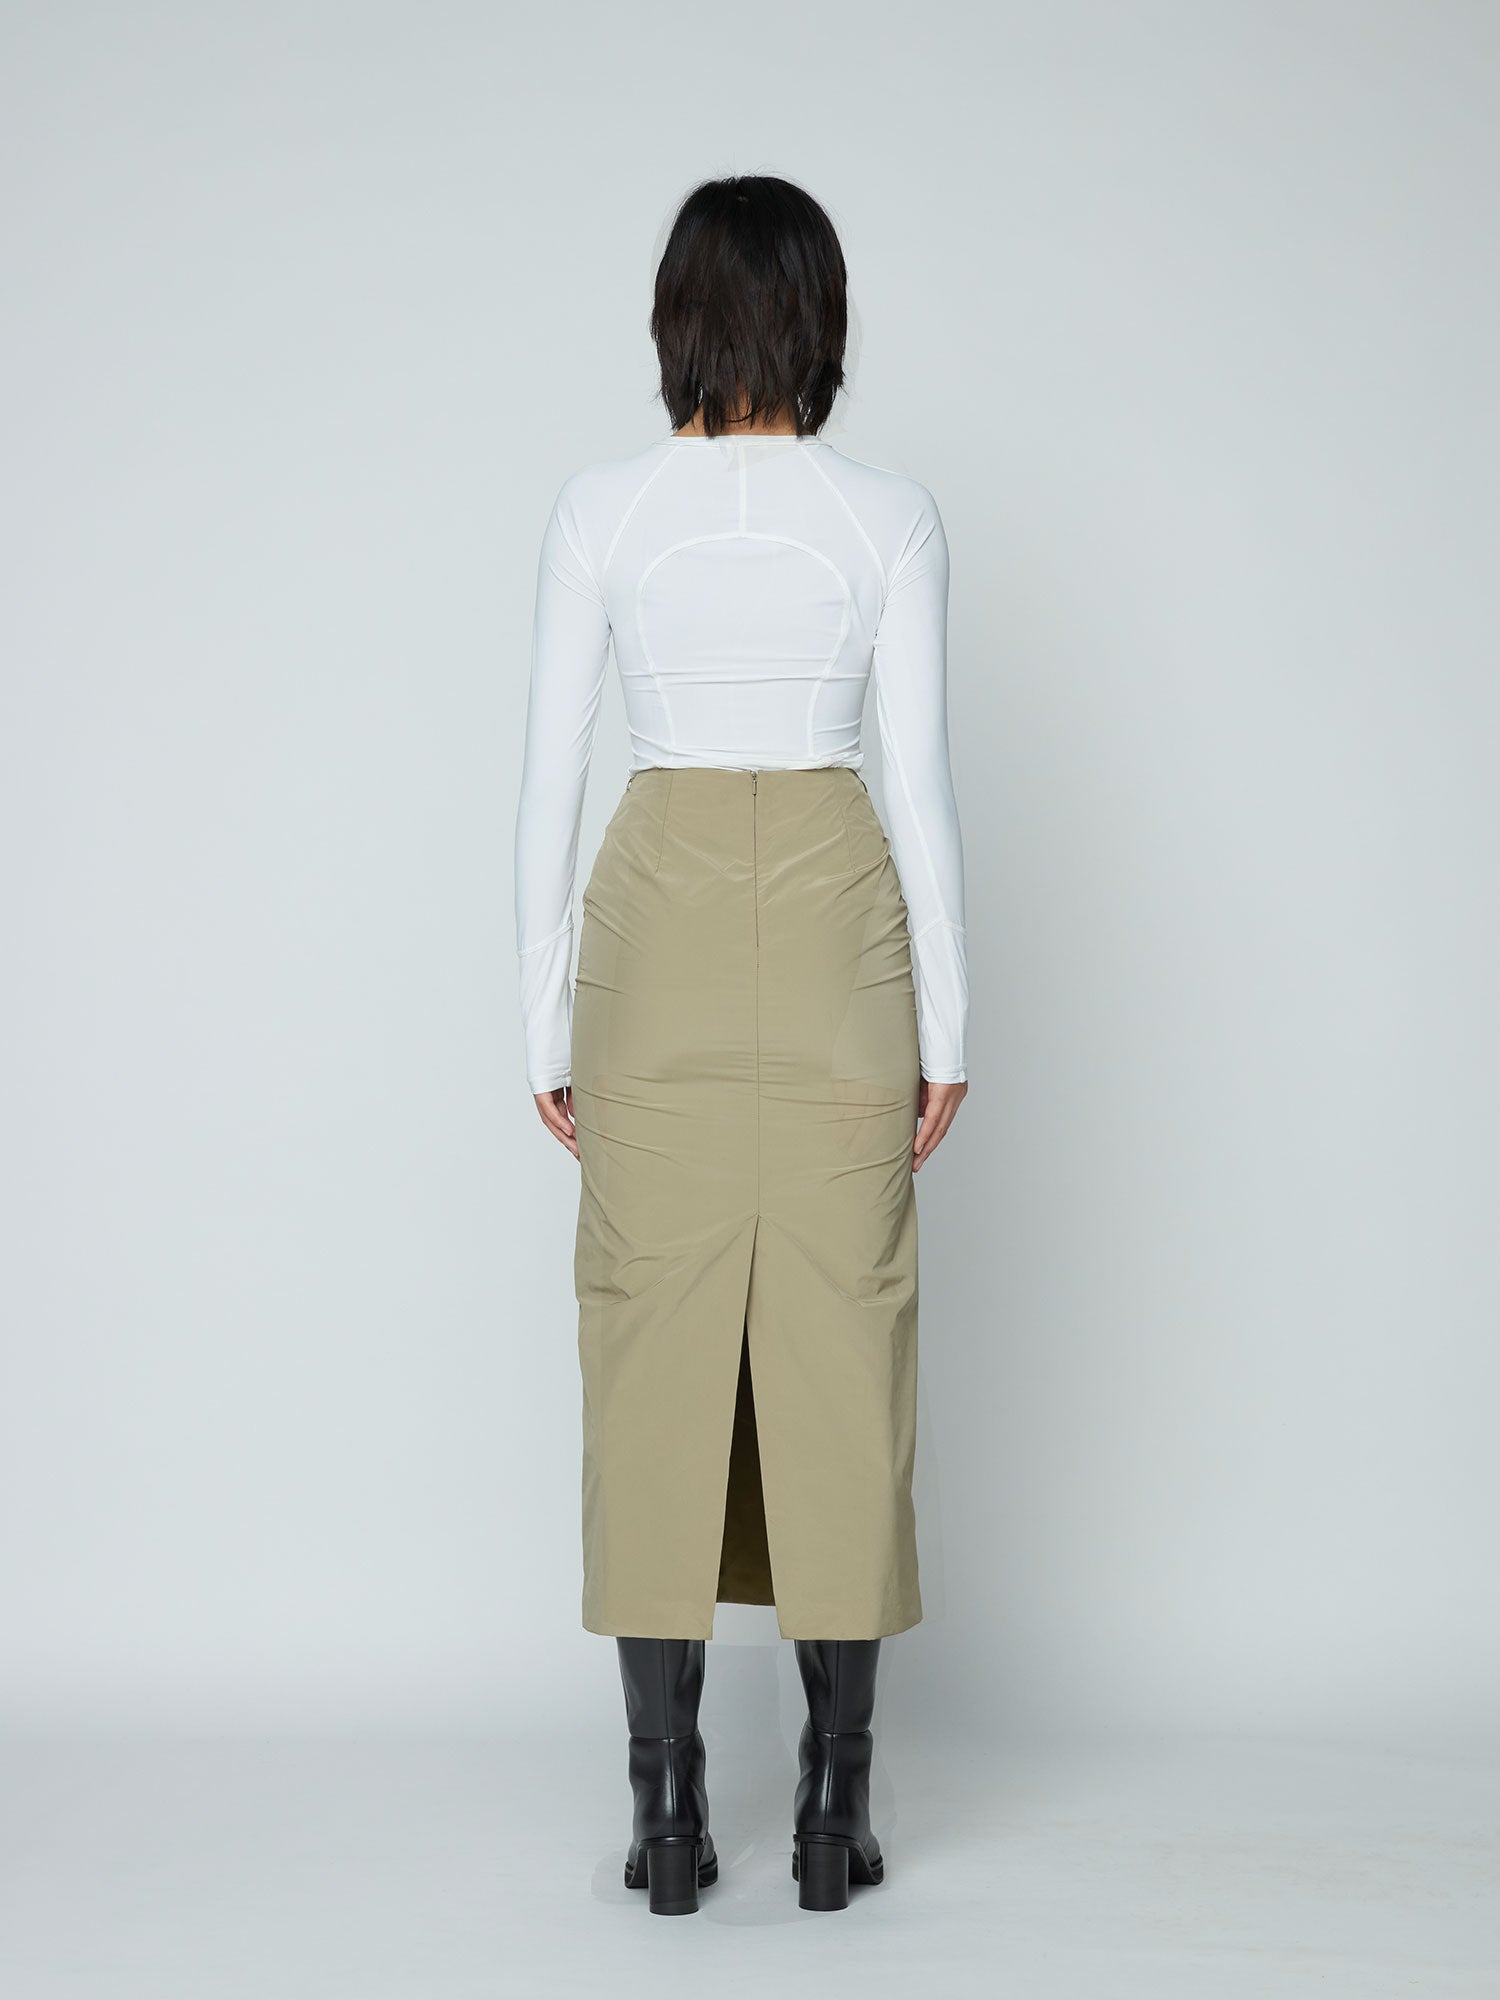 Wynn Hamlyn Sophia Maxi Skirt in Cactus Green available at The New Trend Australia.